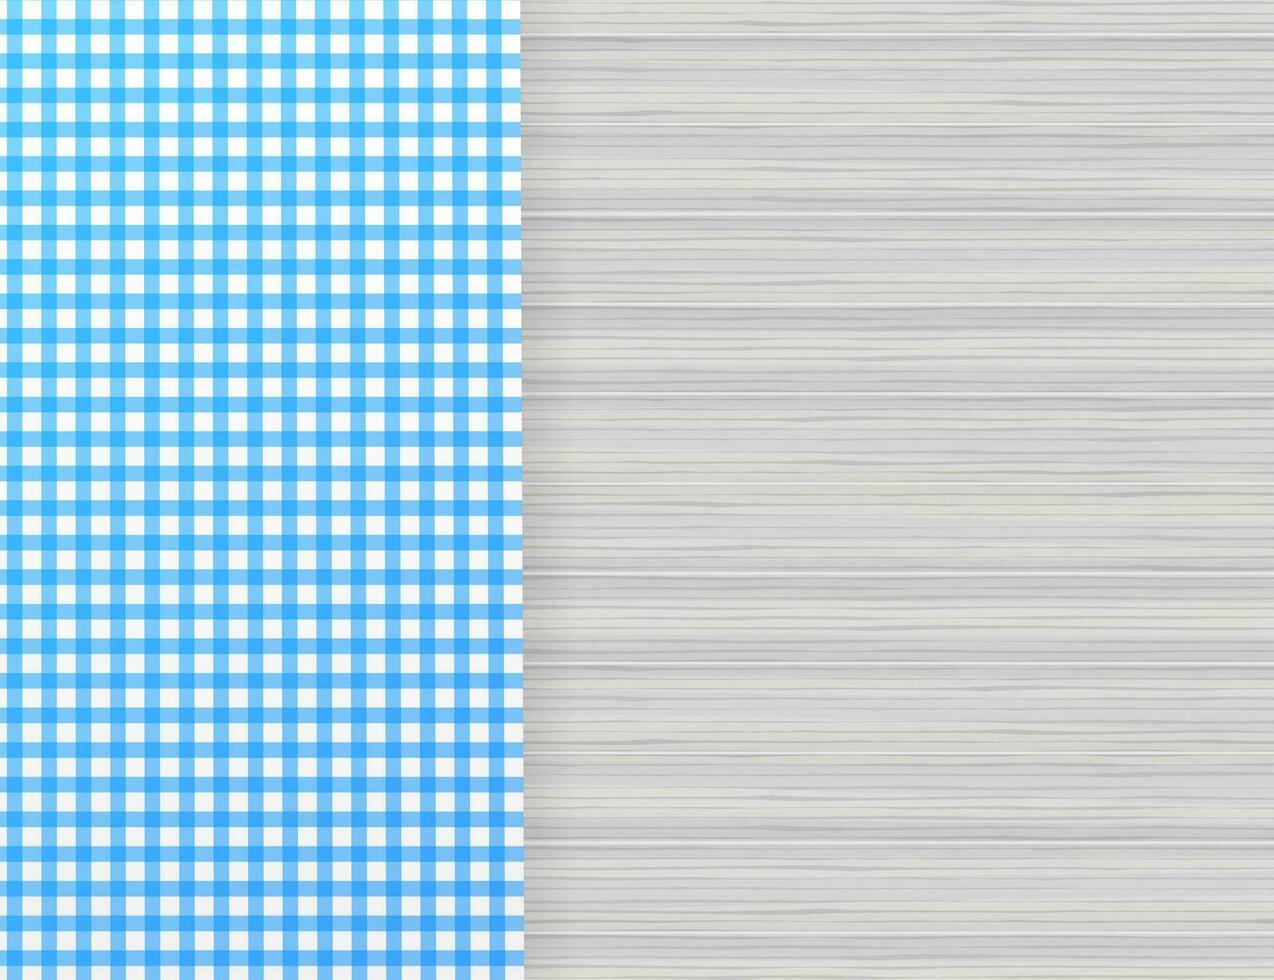 Blue corner tablecloth on white background. Vector stock illustration